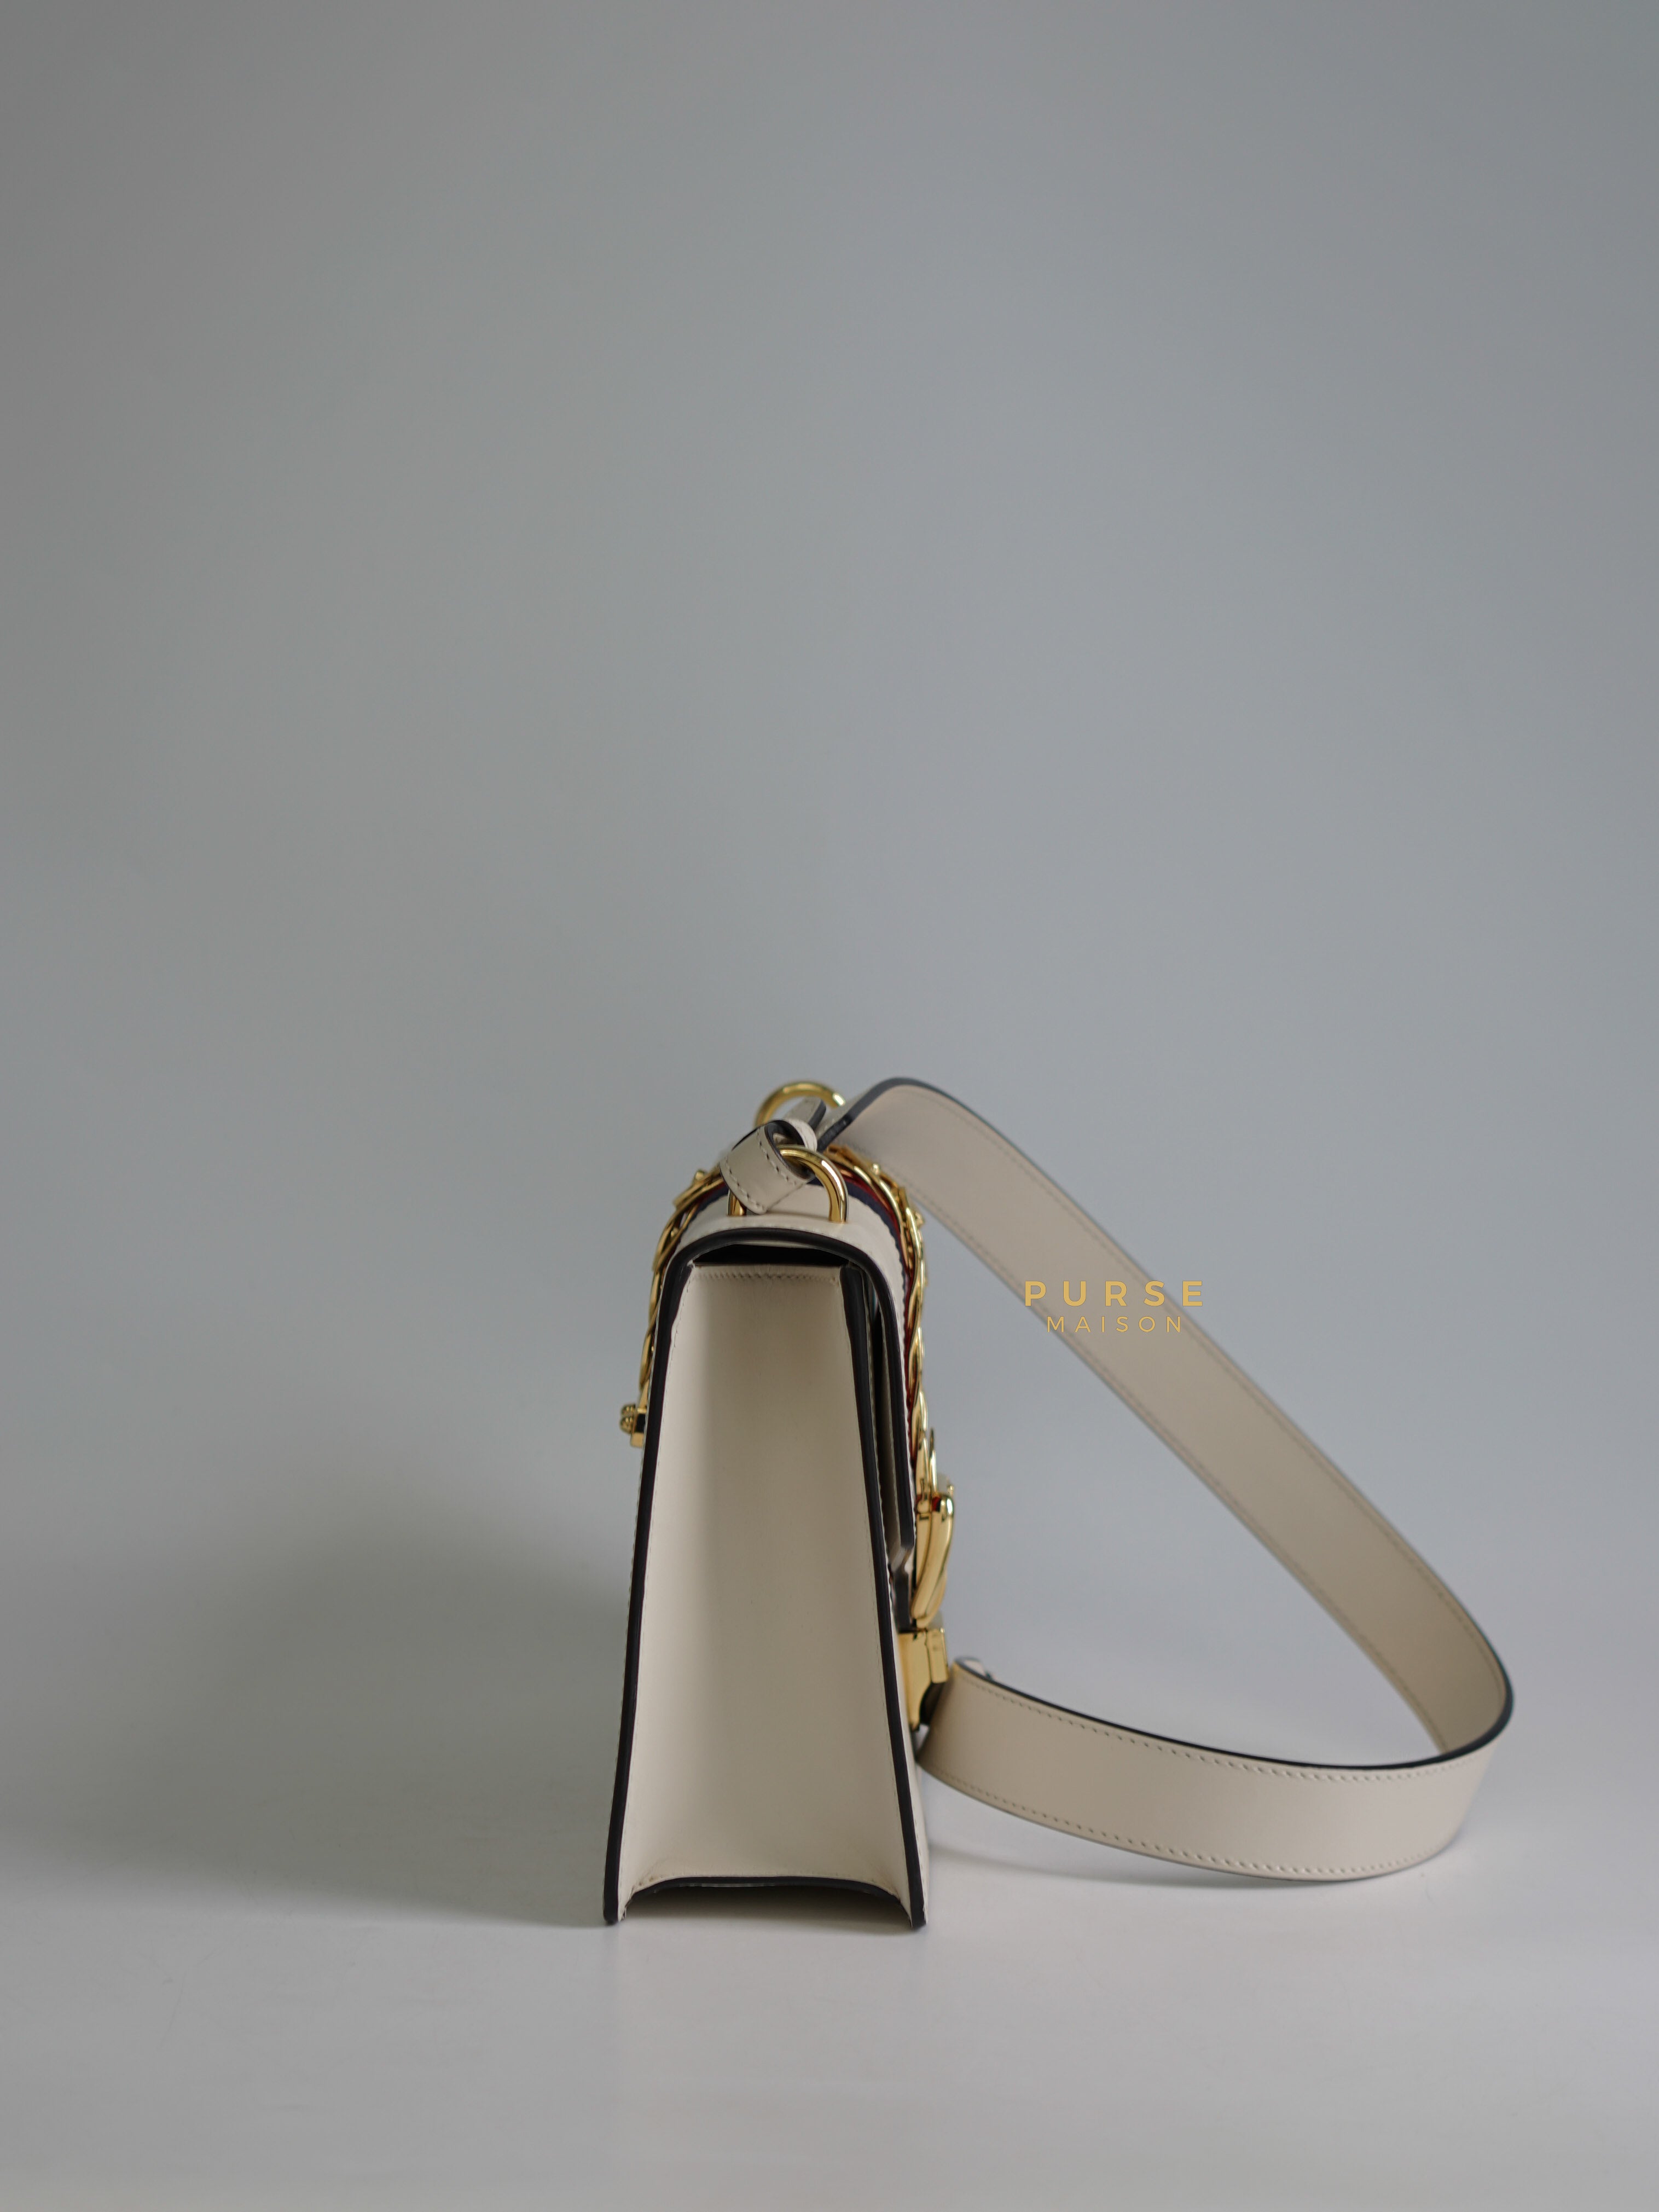 Gucci Sylvie Shoulder Bag in Off White Leather | Purse Maison Luxury Bags Shop